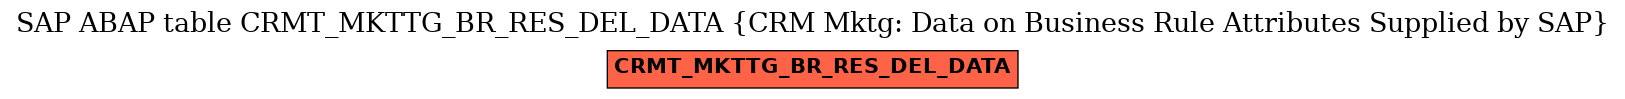 E-R Diagram for table CRMT_MKTTG_BR_RES_DEL_DATA (CRM Mktg: Data on Business Rule Attributes Supplied by SAP)